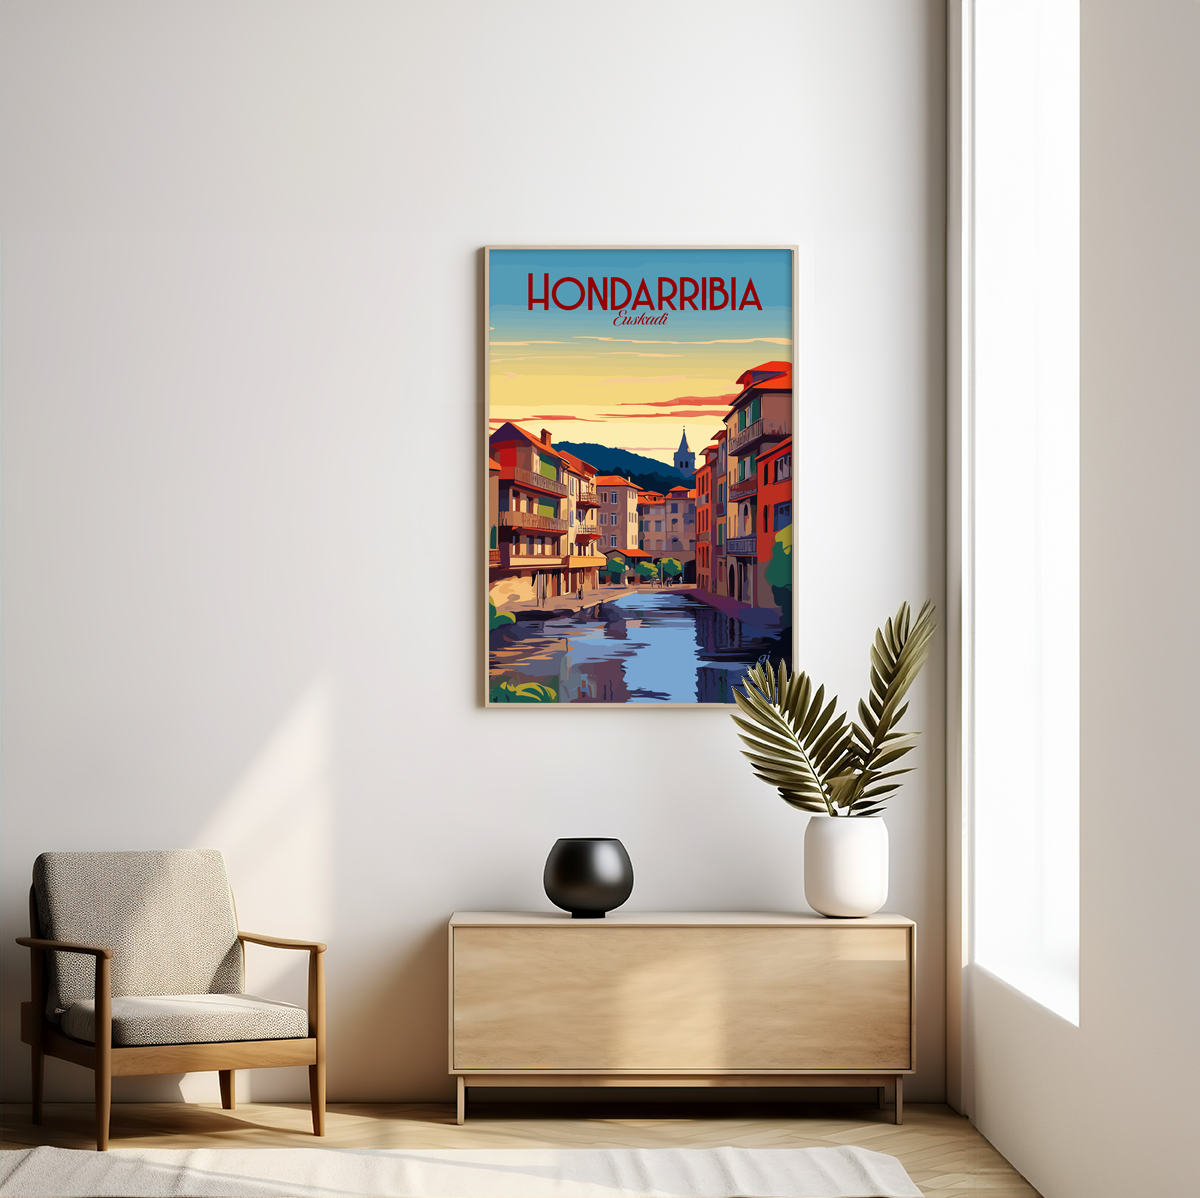 Hondarribia poster by bon voyage design